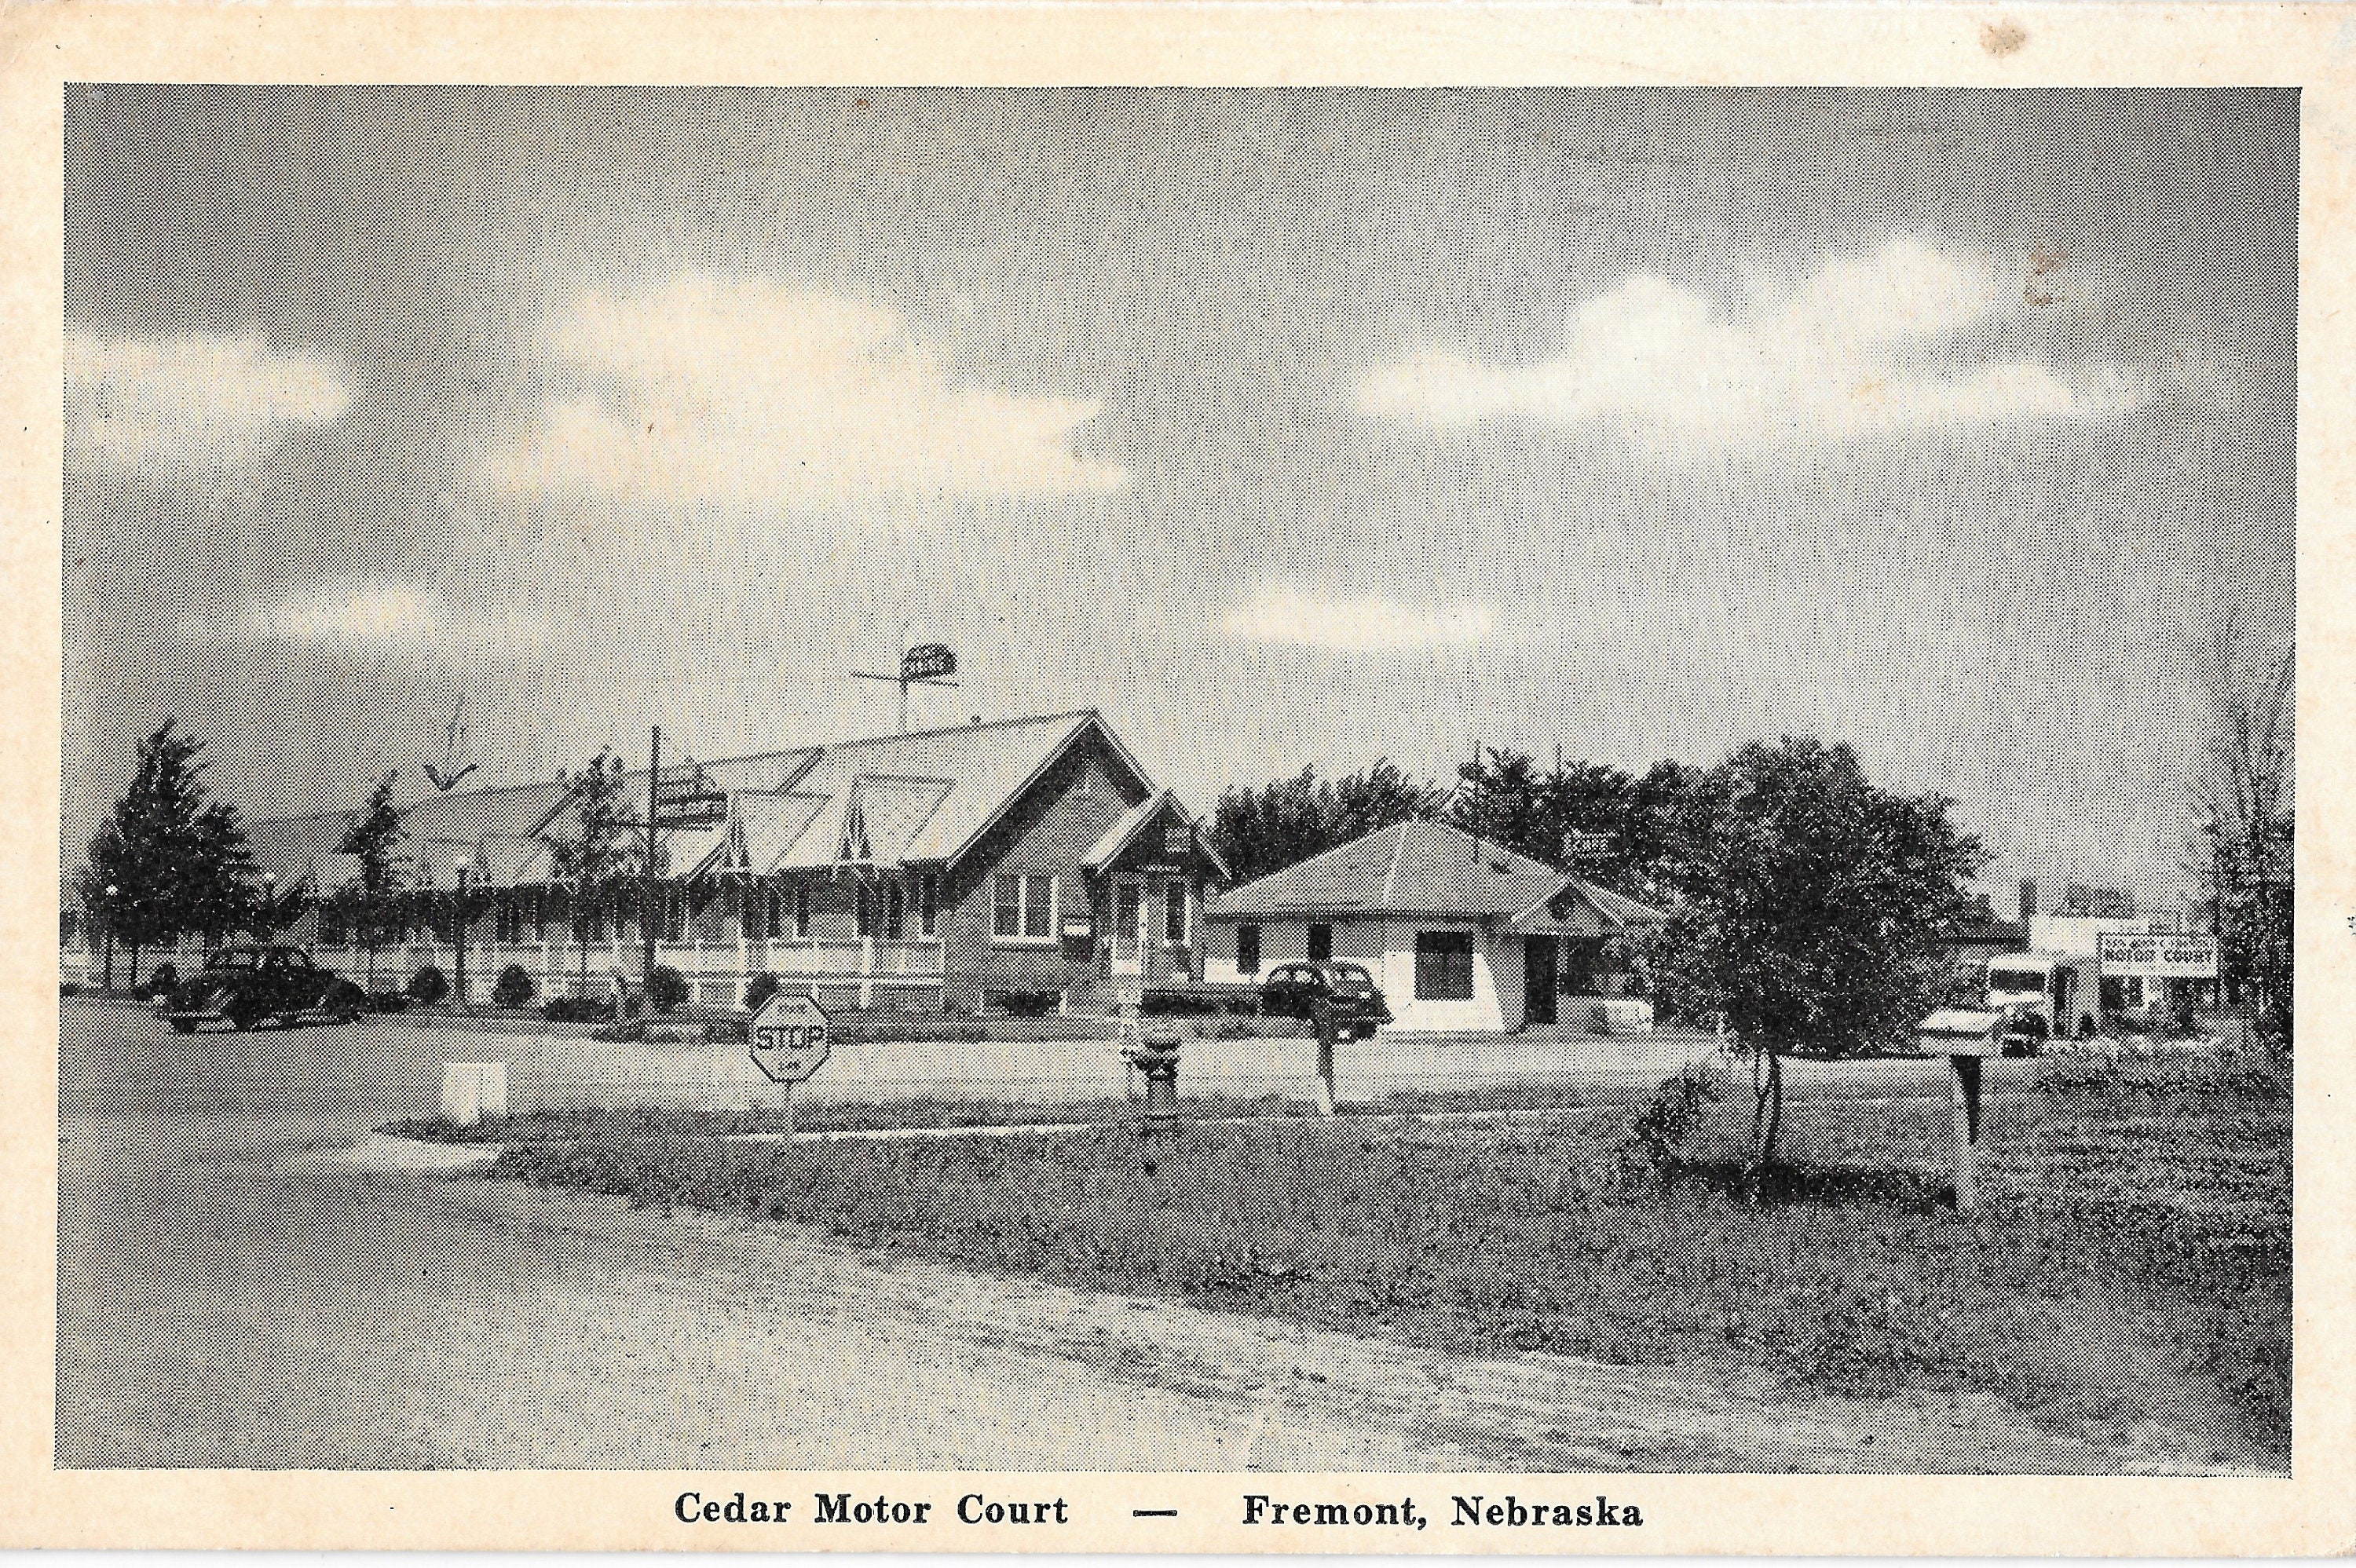 Cedar Motor Court Fremont Nebraska 1941 Vintage Postcard image photo